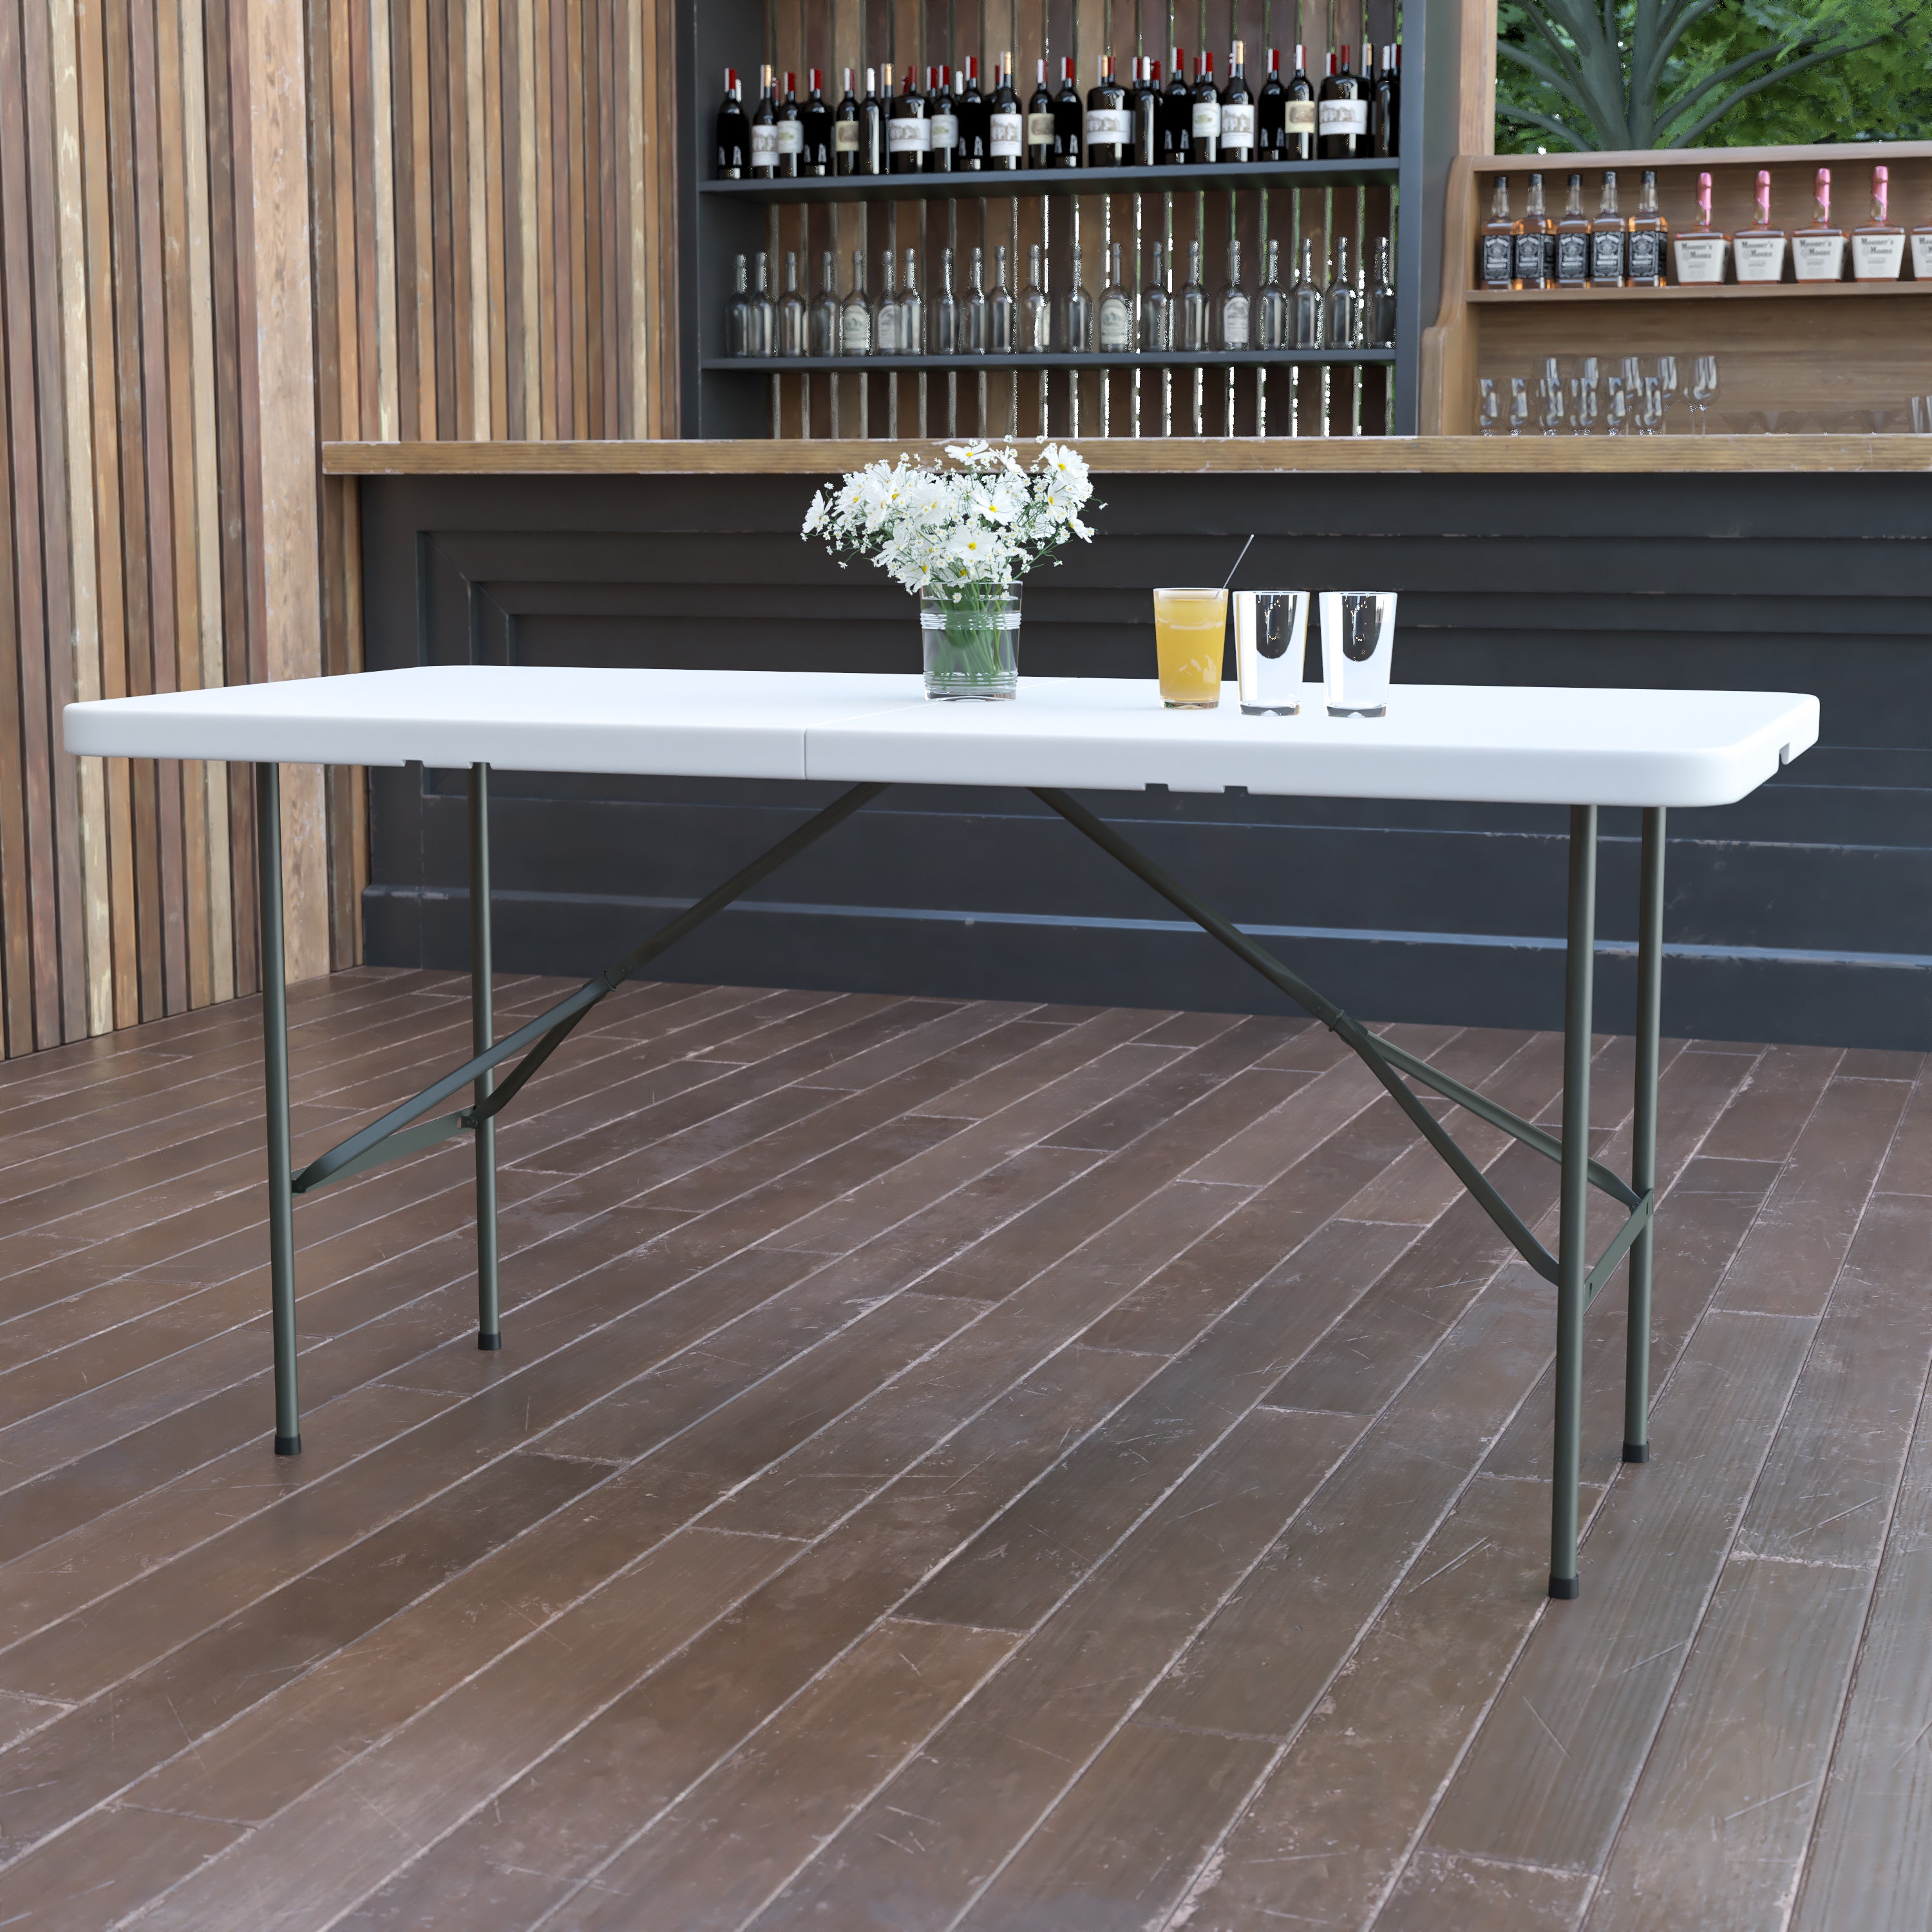 5-Foot Bi-Fold Plastic Folding Table-Rectangular Plastic Folding Table-Flash Furniture-Wall2Wall Furnishings